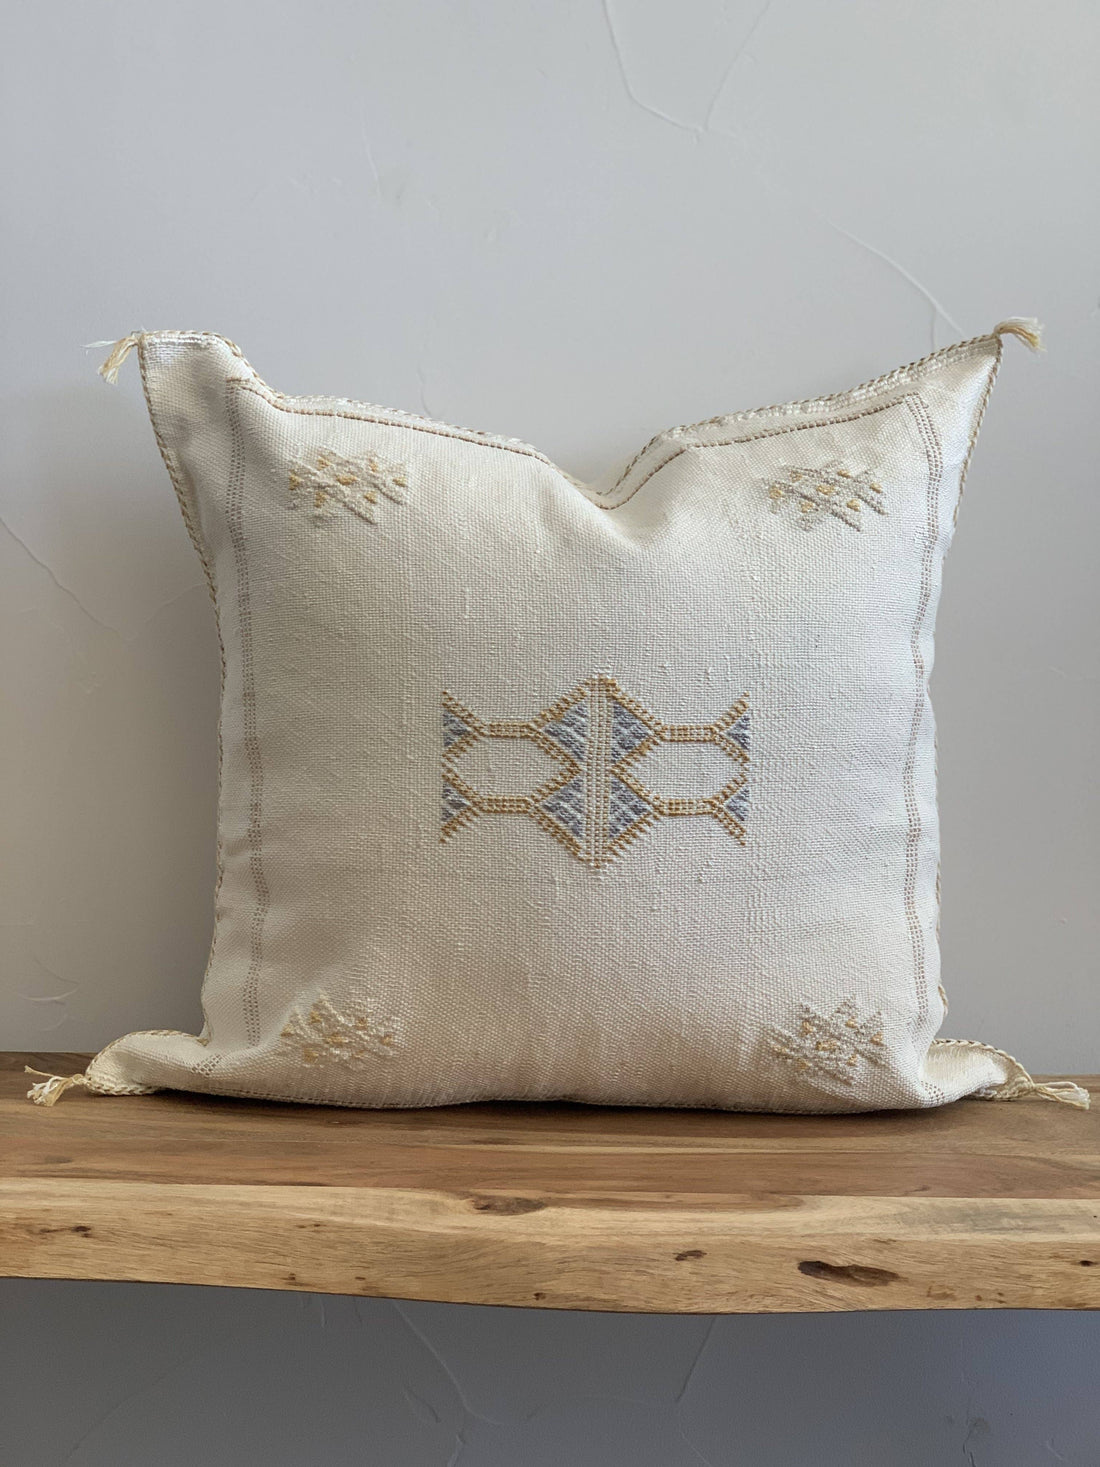 Handmade Cactus Silk Throw Pillow Covers- designs will vary